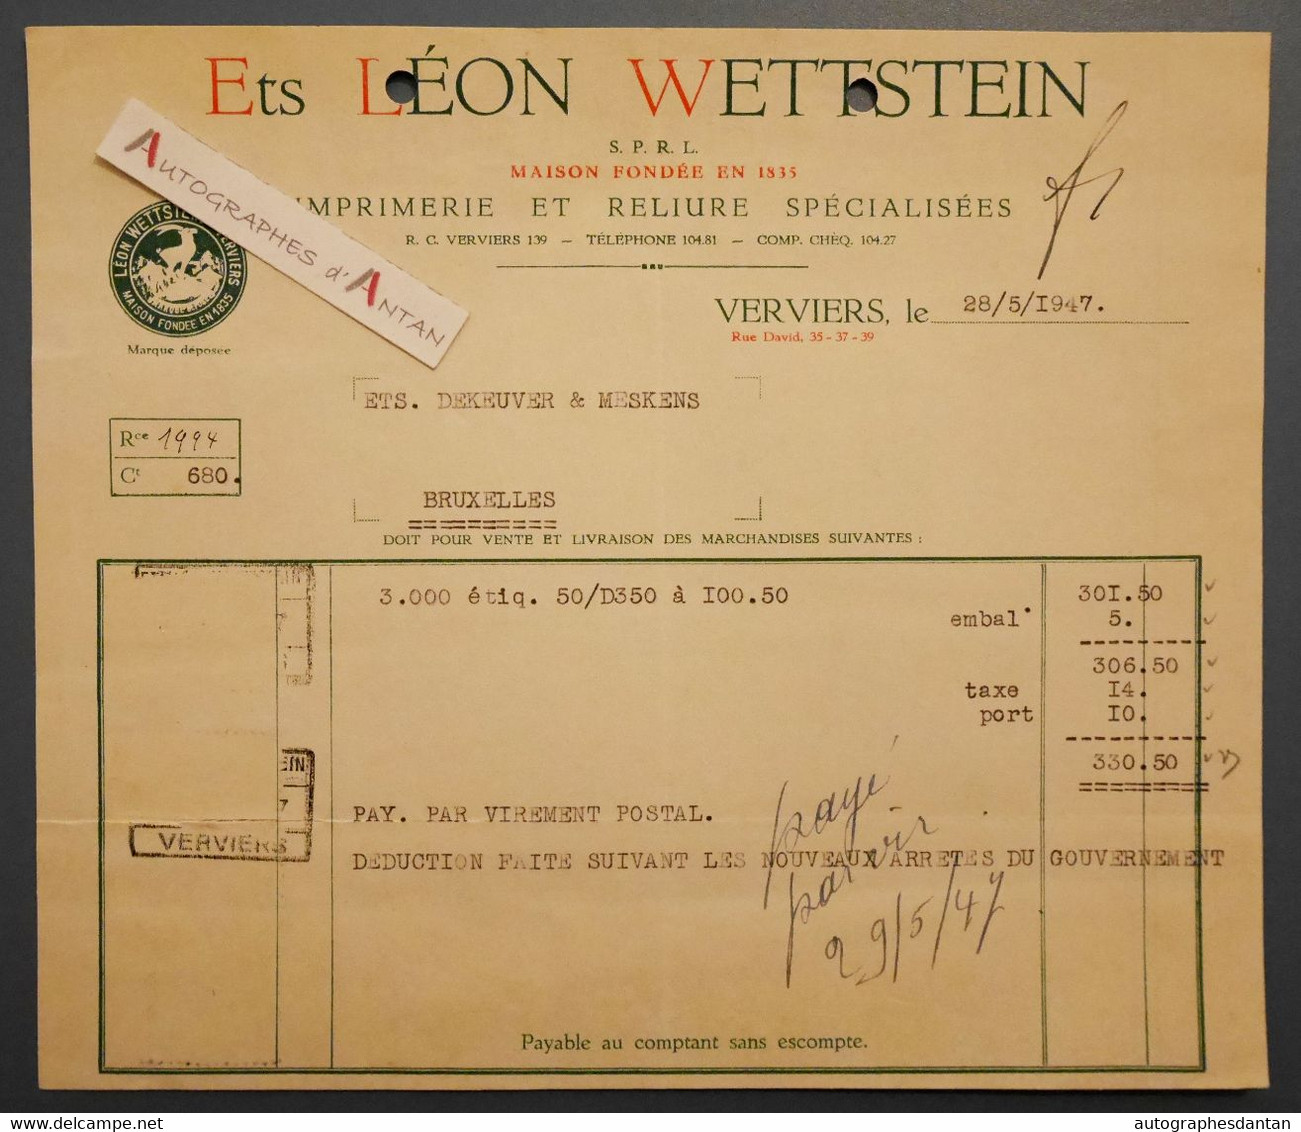 Léon WETTSTEIN Imprimerie & Reliure - VERVIERS - Facture 1947 > Ets Dekeuver Et Meskens - Belgique - Druck & Papierwaren